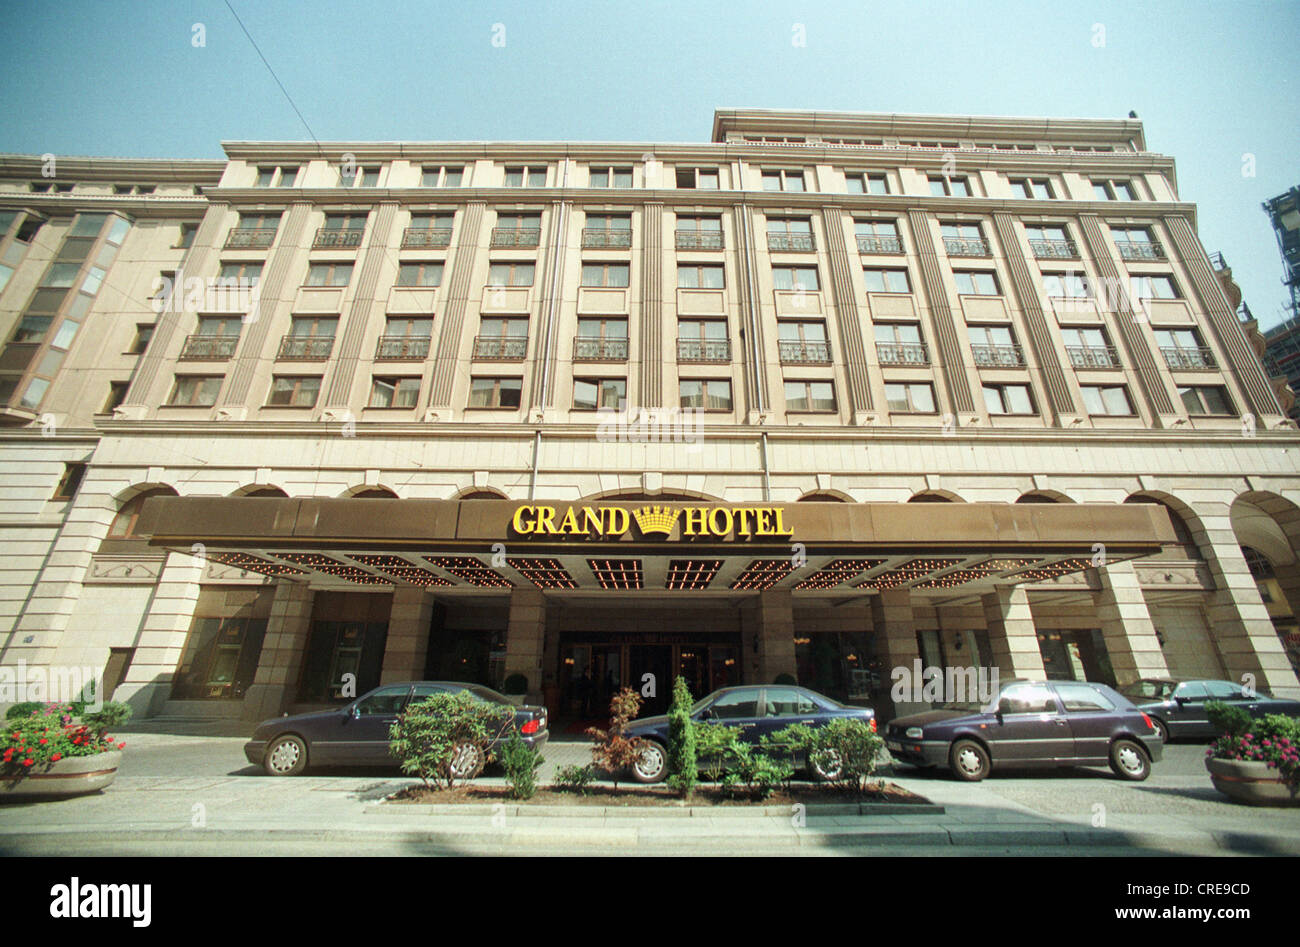 Grand Hotel, Berlin, Germany Stock Photo - Alamy